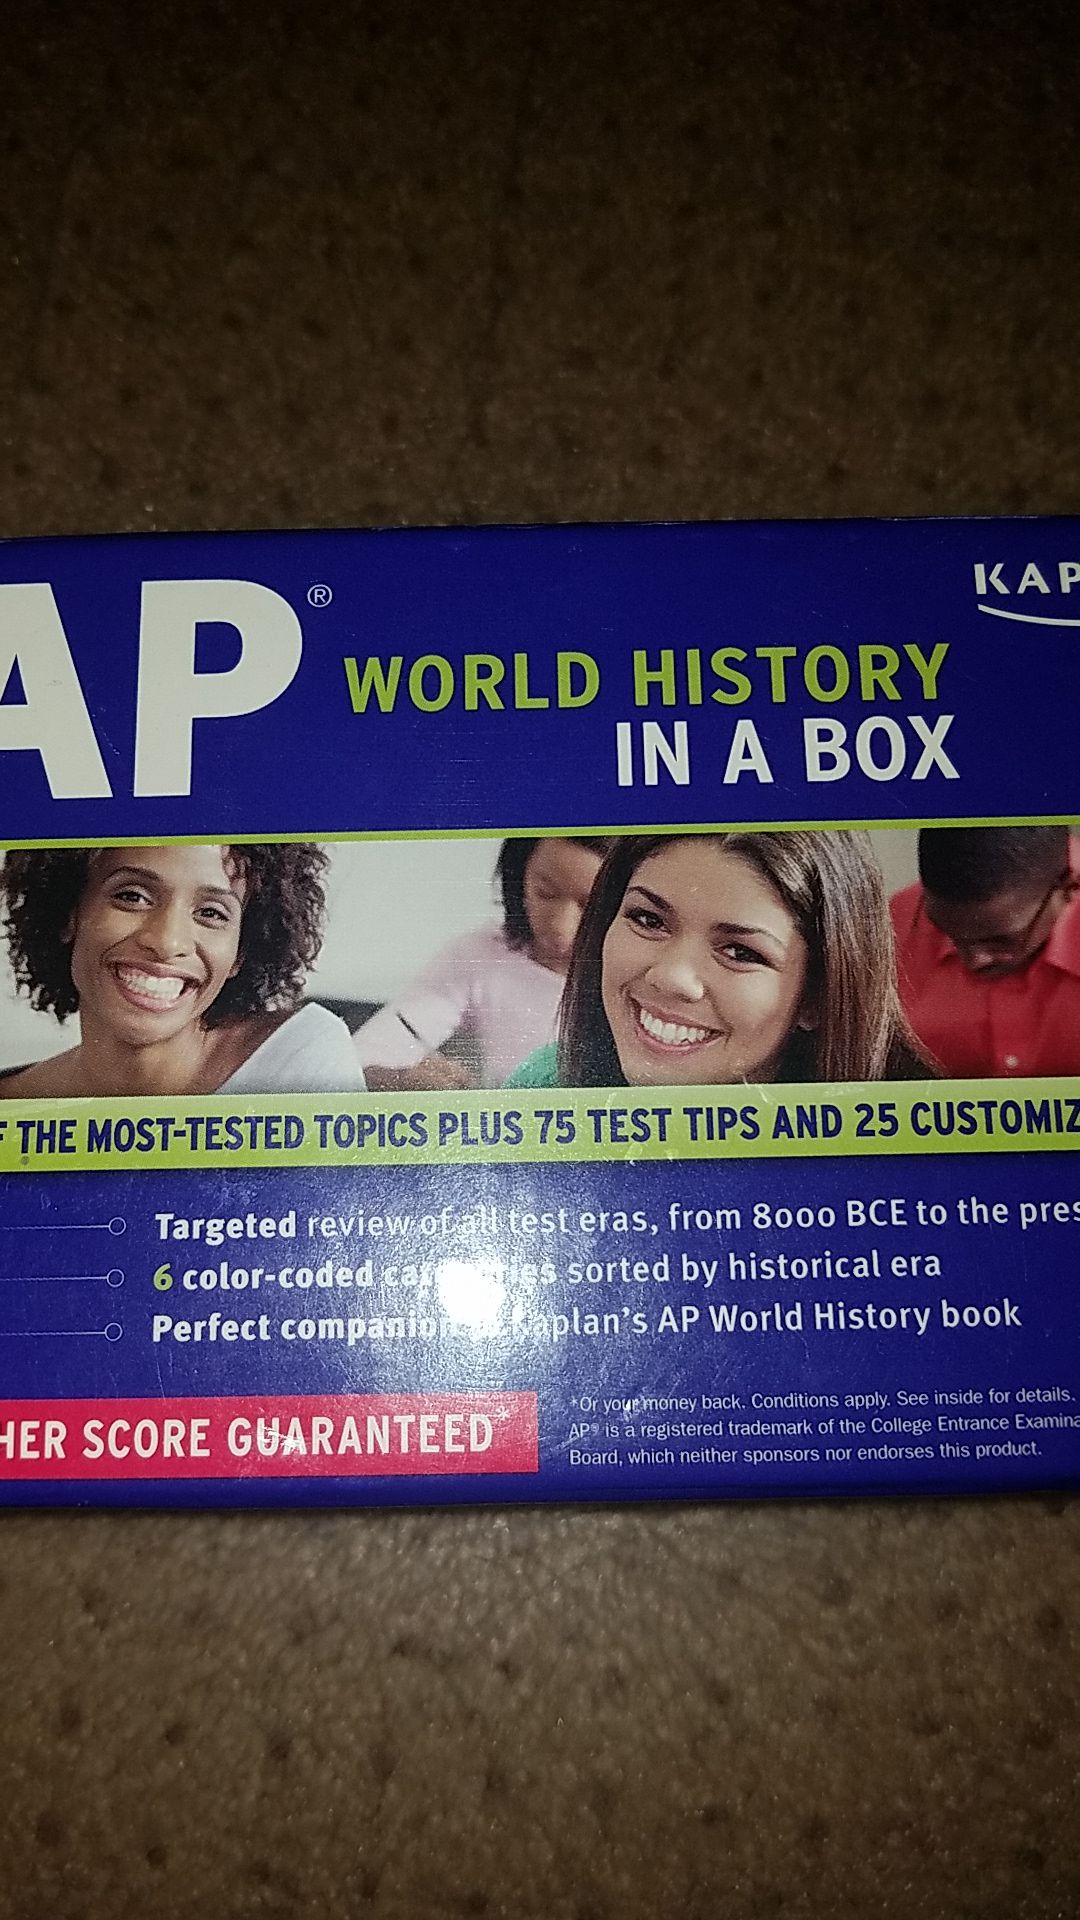 Kaplan AP World History in a box